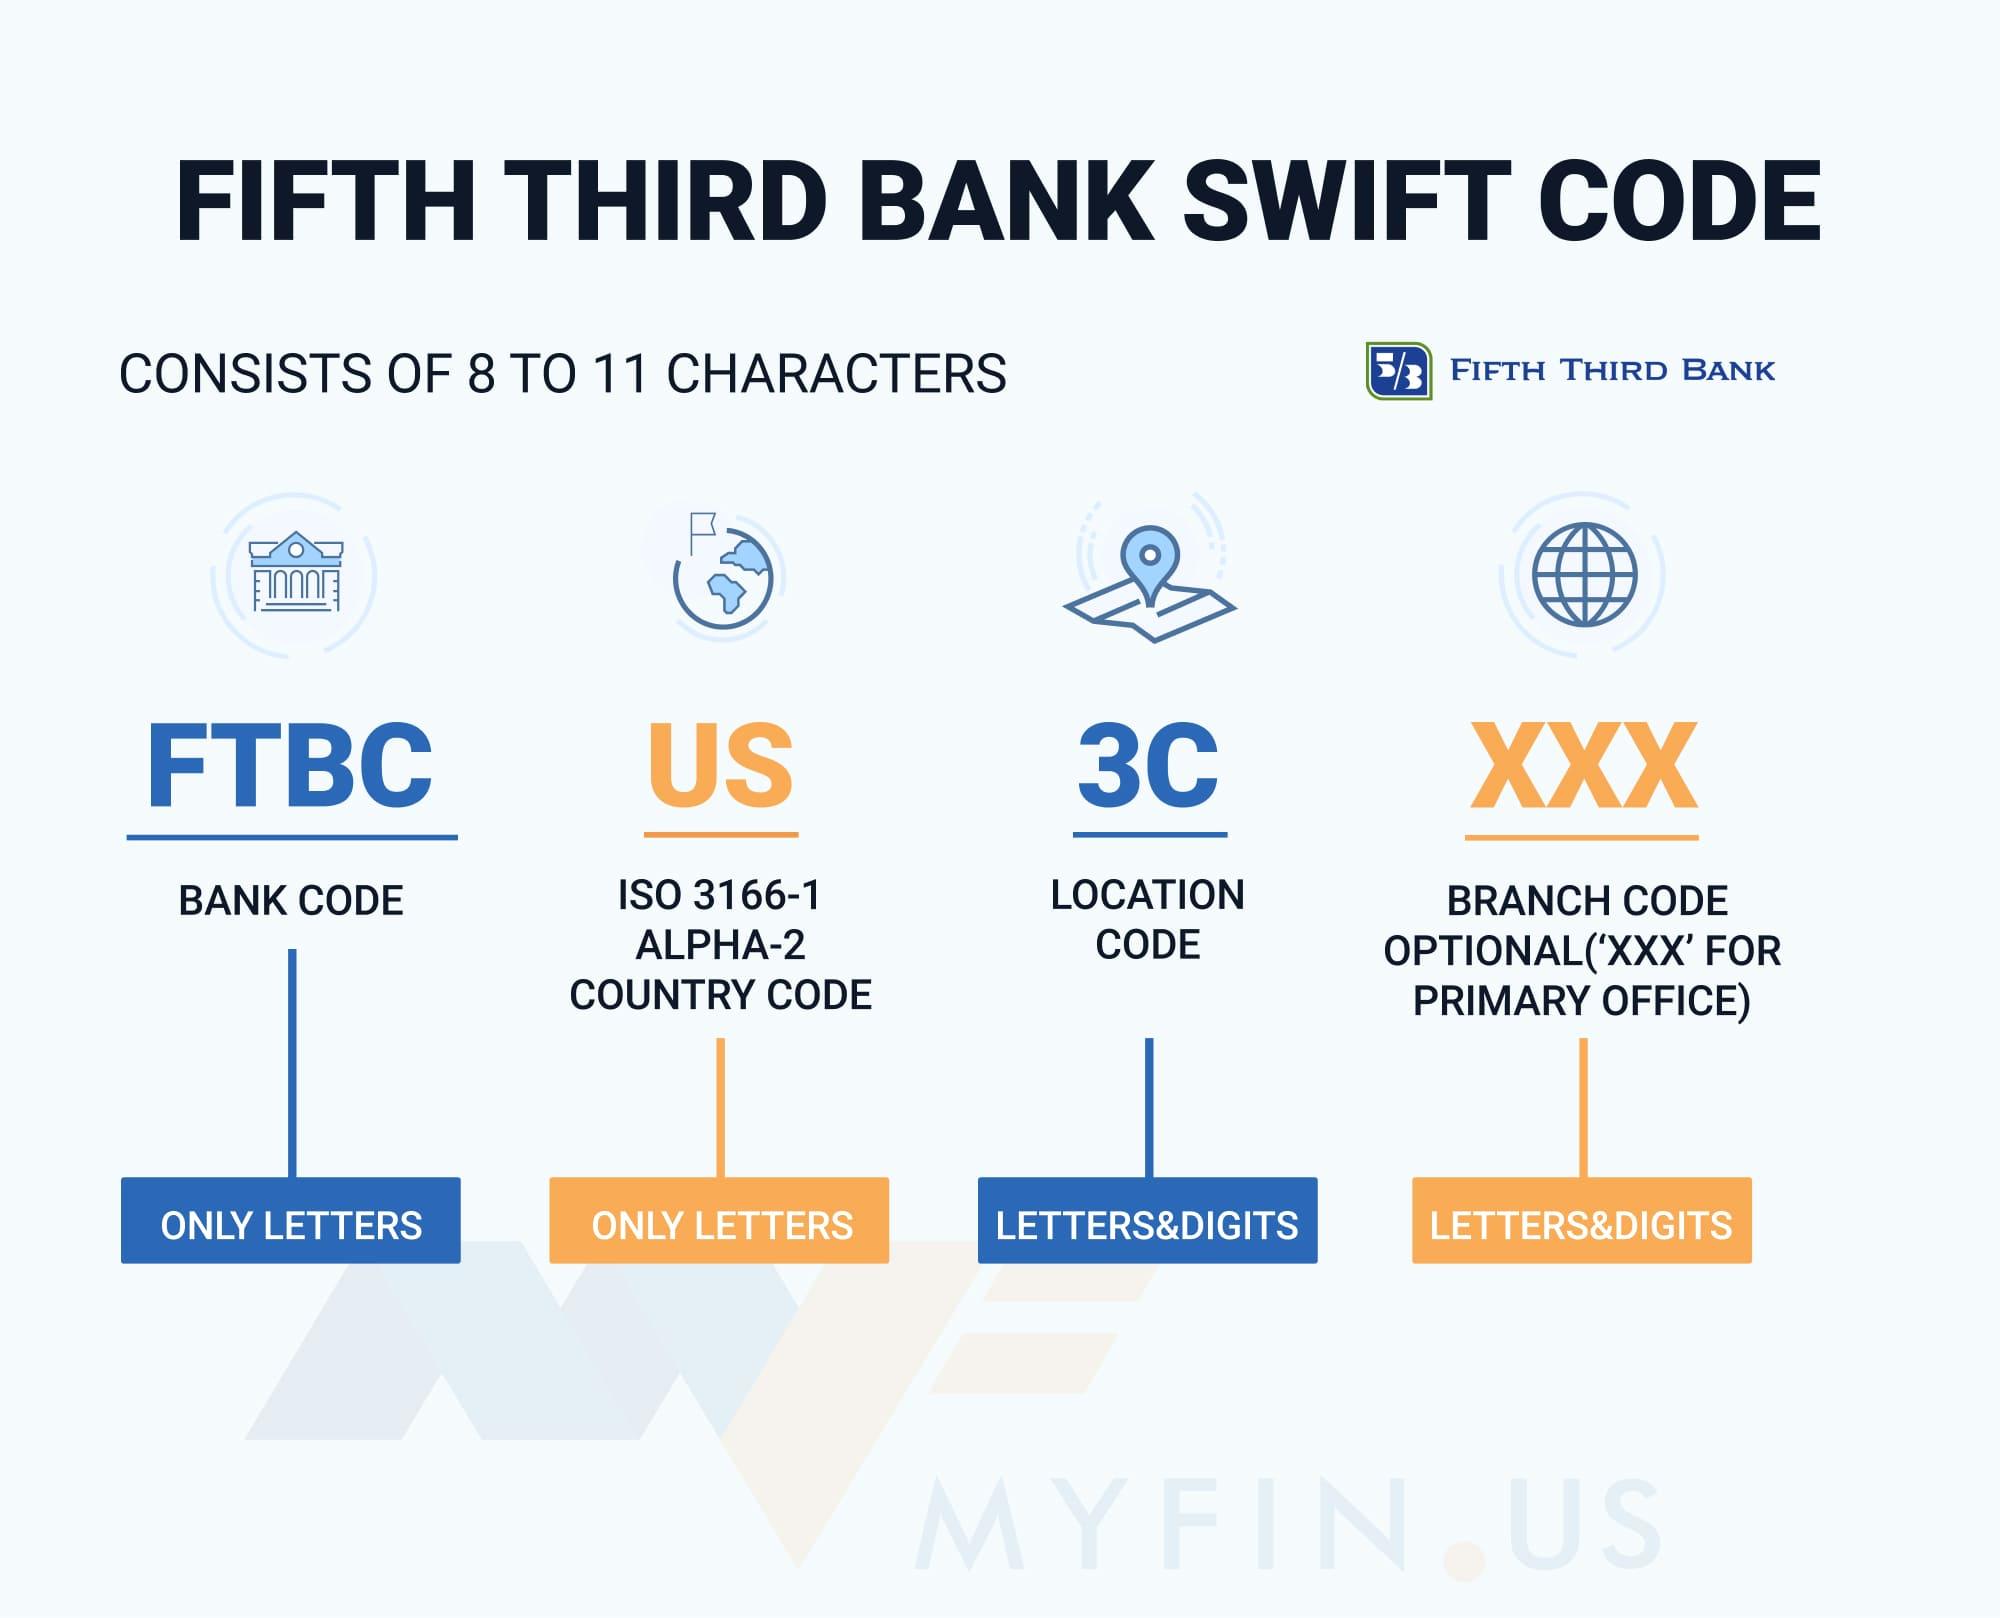 SWIFT-code Fifth Third Bank